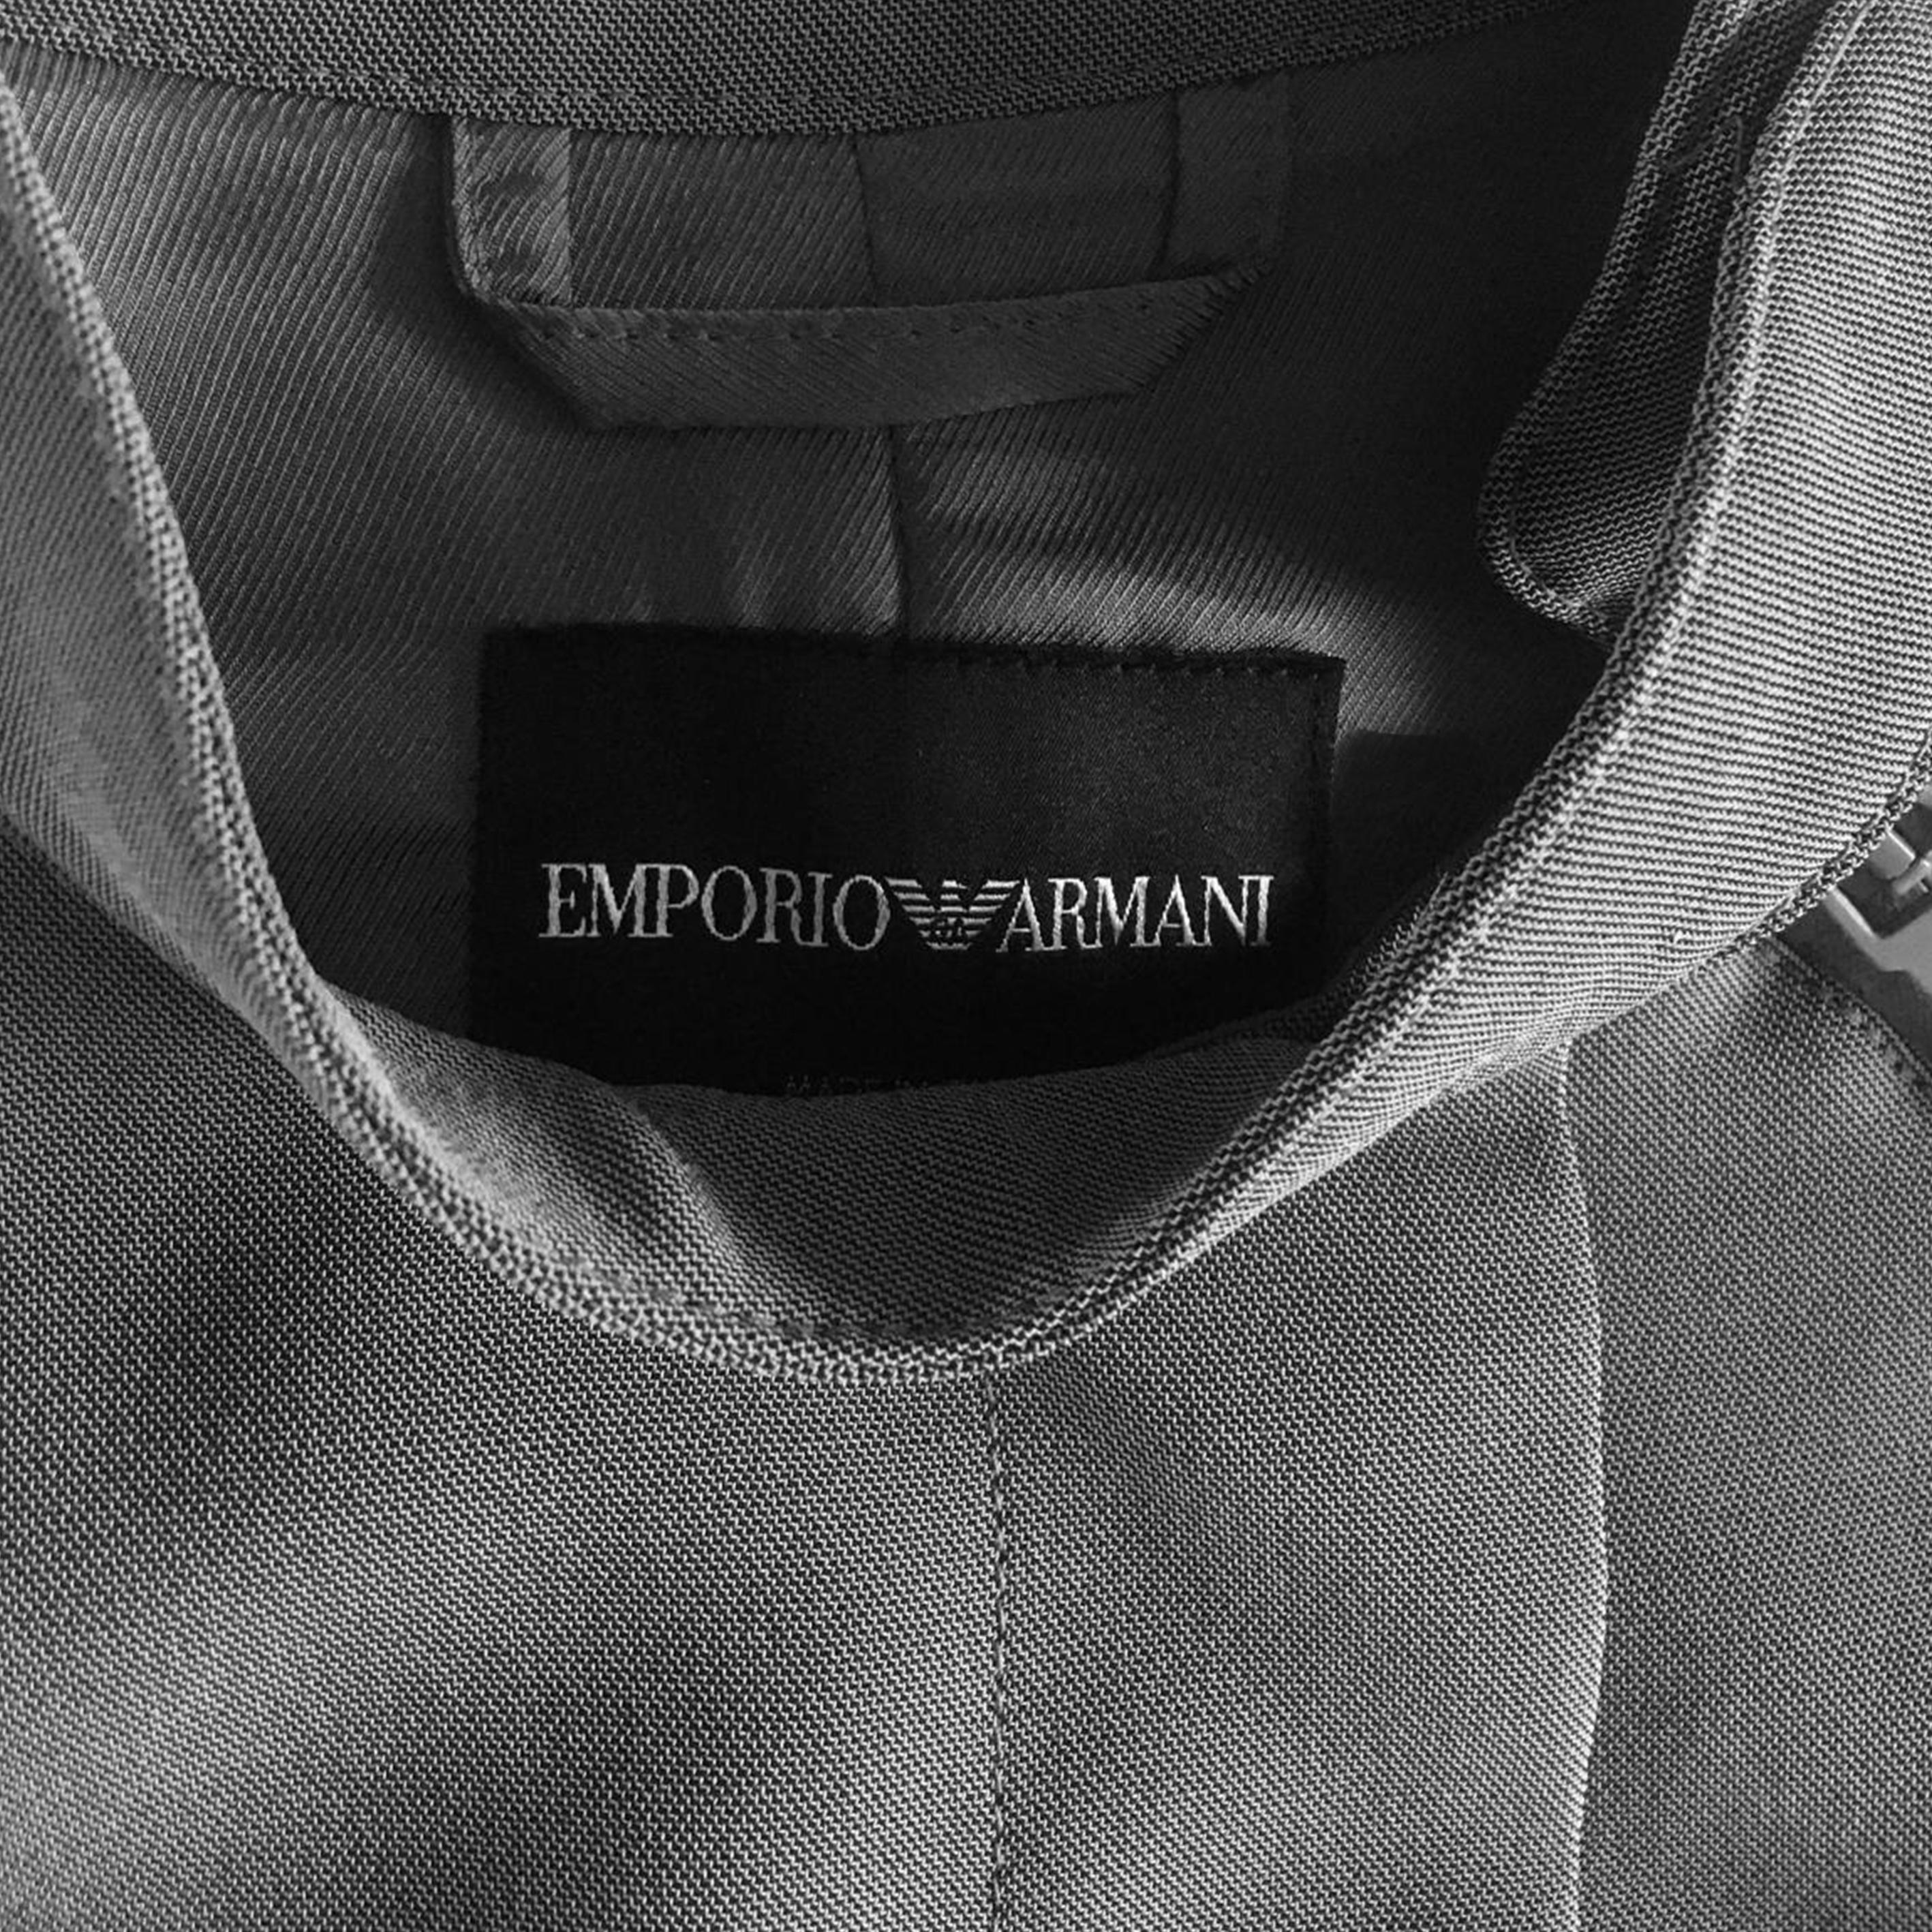 Women's or Men's Emporio Armani ss2011 For Sale